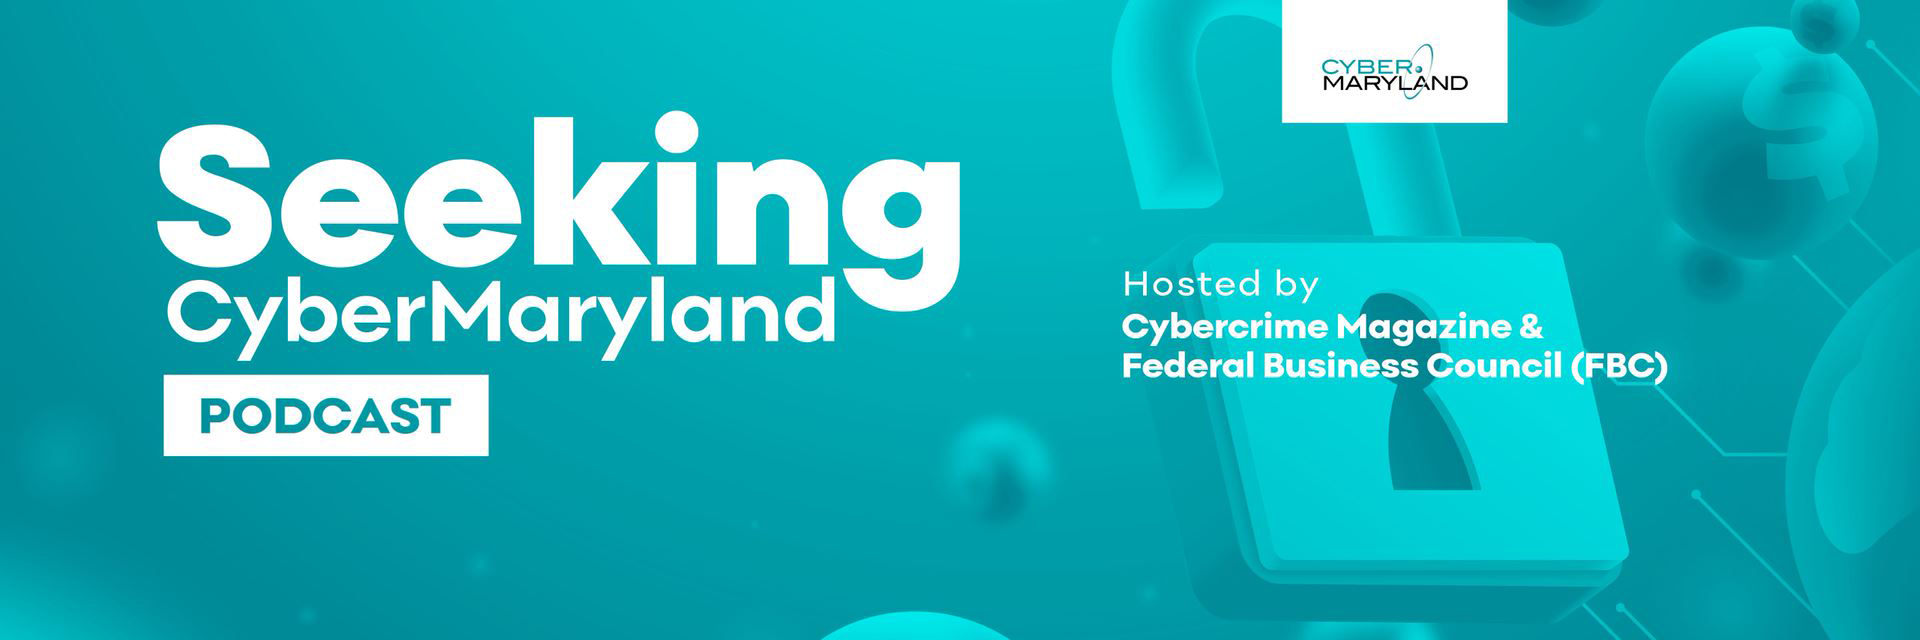 Seeking CyberMaryland Podcast